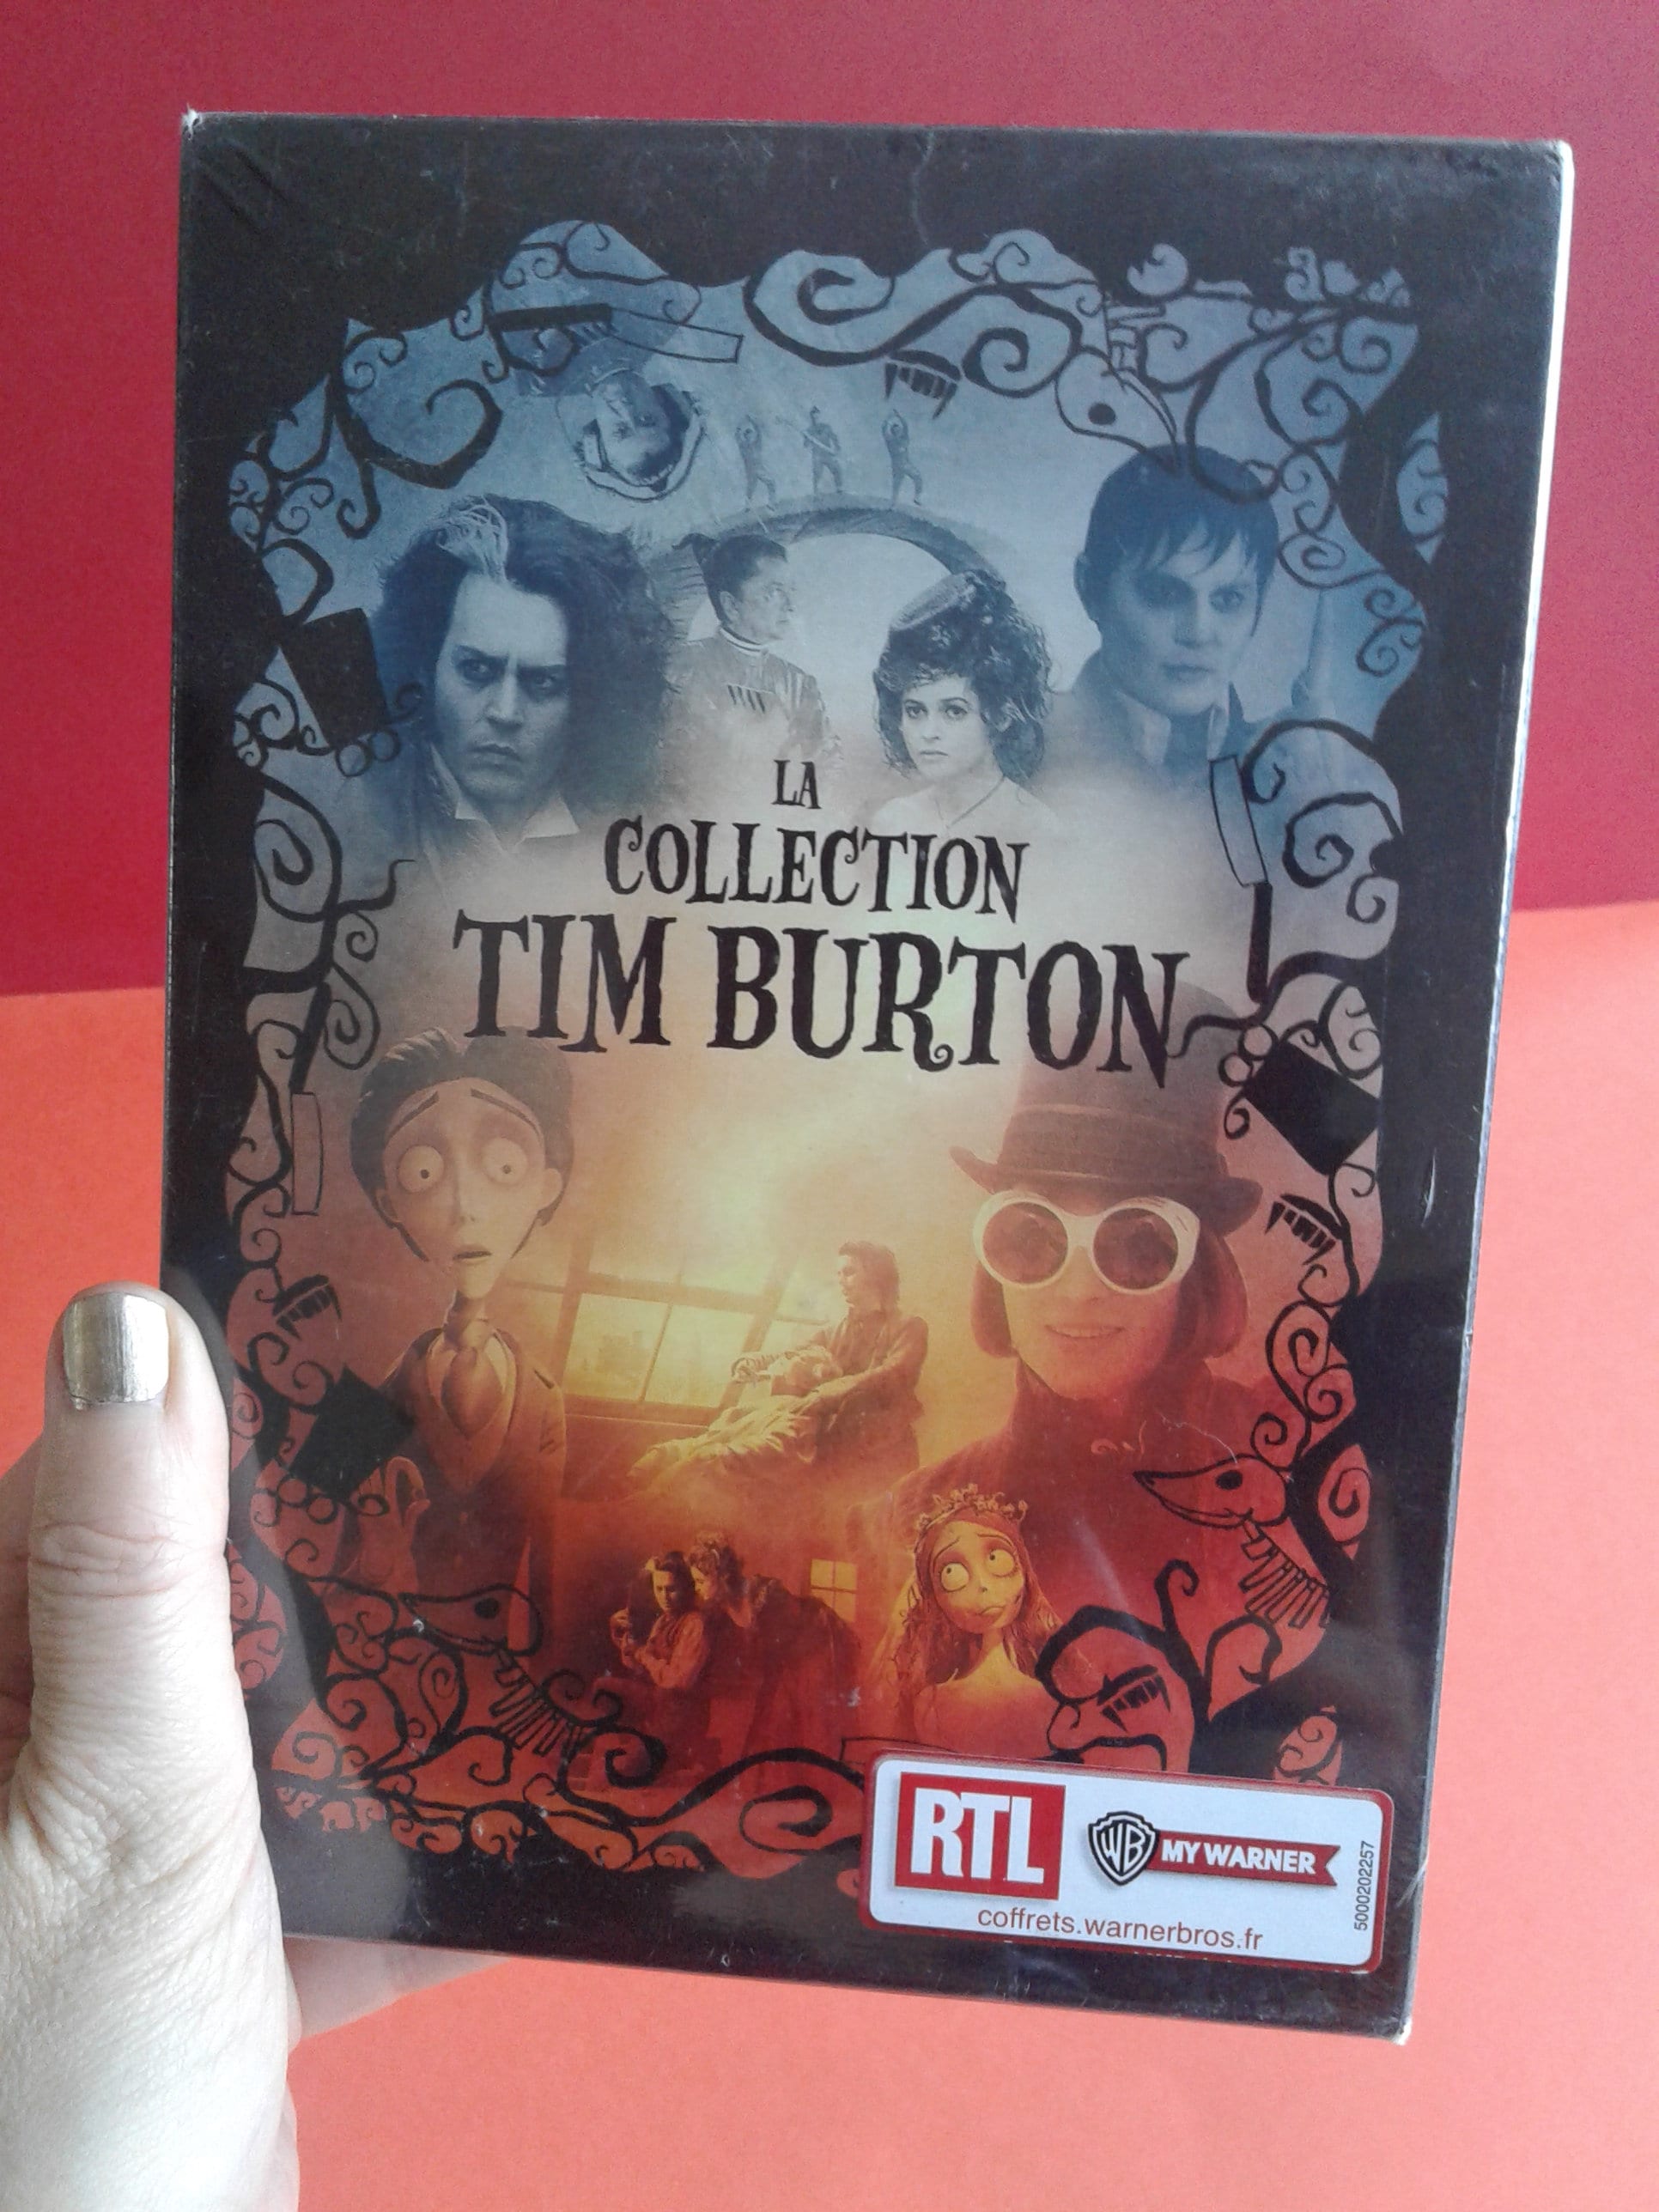 Tim BURTON 4 DVD Box Set. Collection. Gift. Halloween. - Etsy